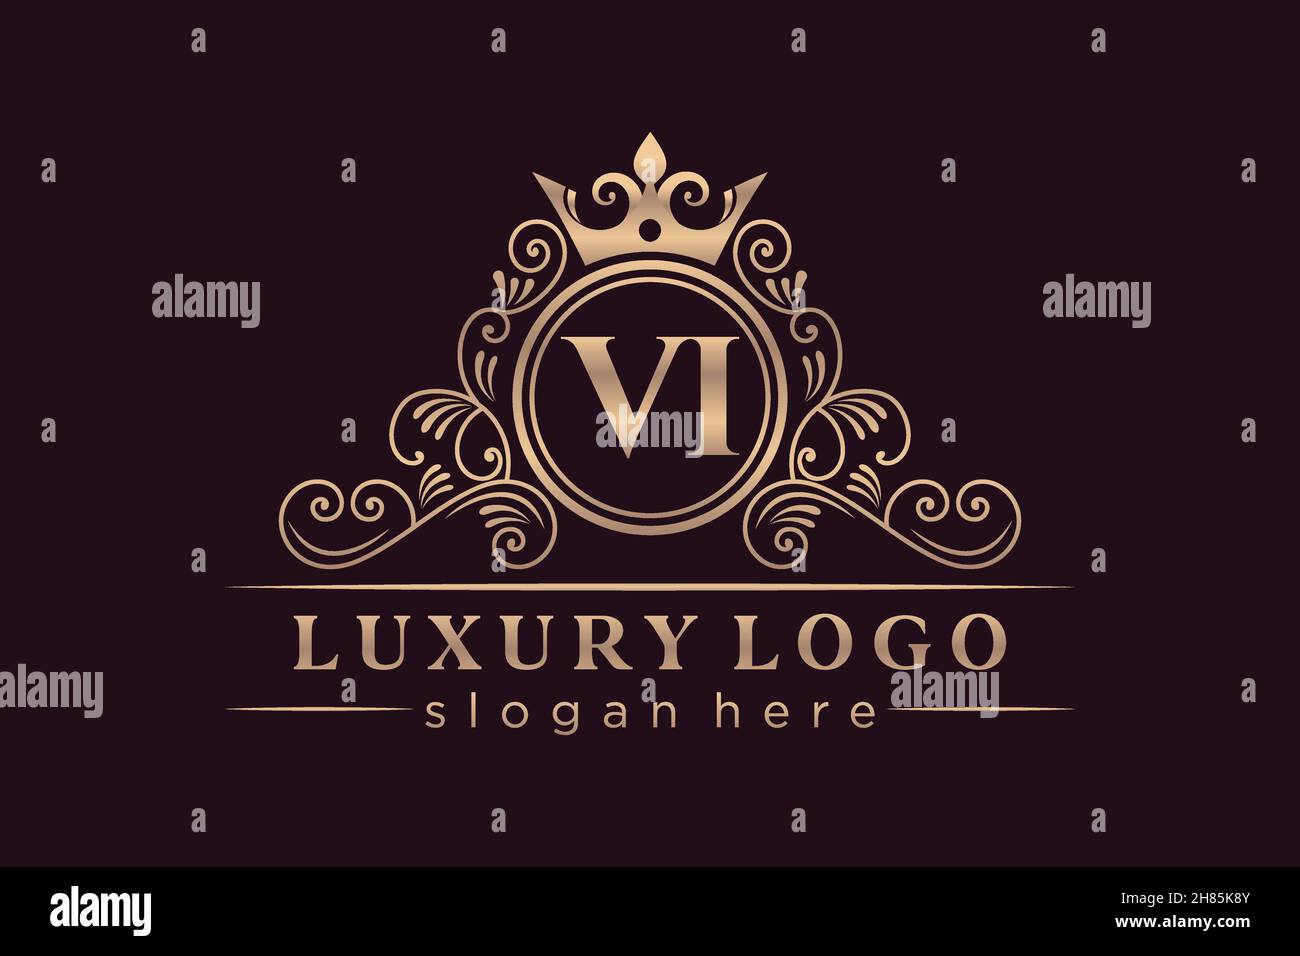 VL Logo Design, Initial VL Letter Design with Sci-fi Style. VL Logo for  Game, Esport, Technology, Digital, Community or Business Stock Vector -  Illustration of techno, monogram: 192979281